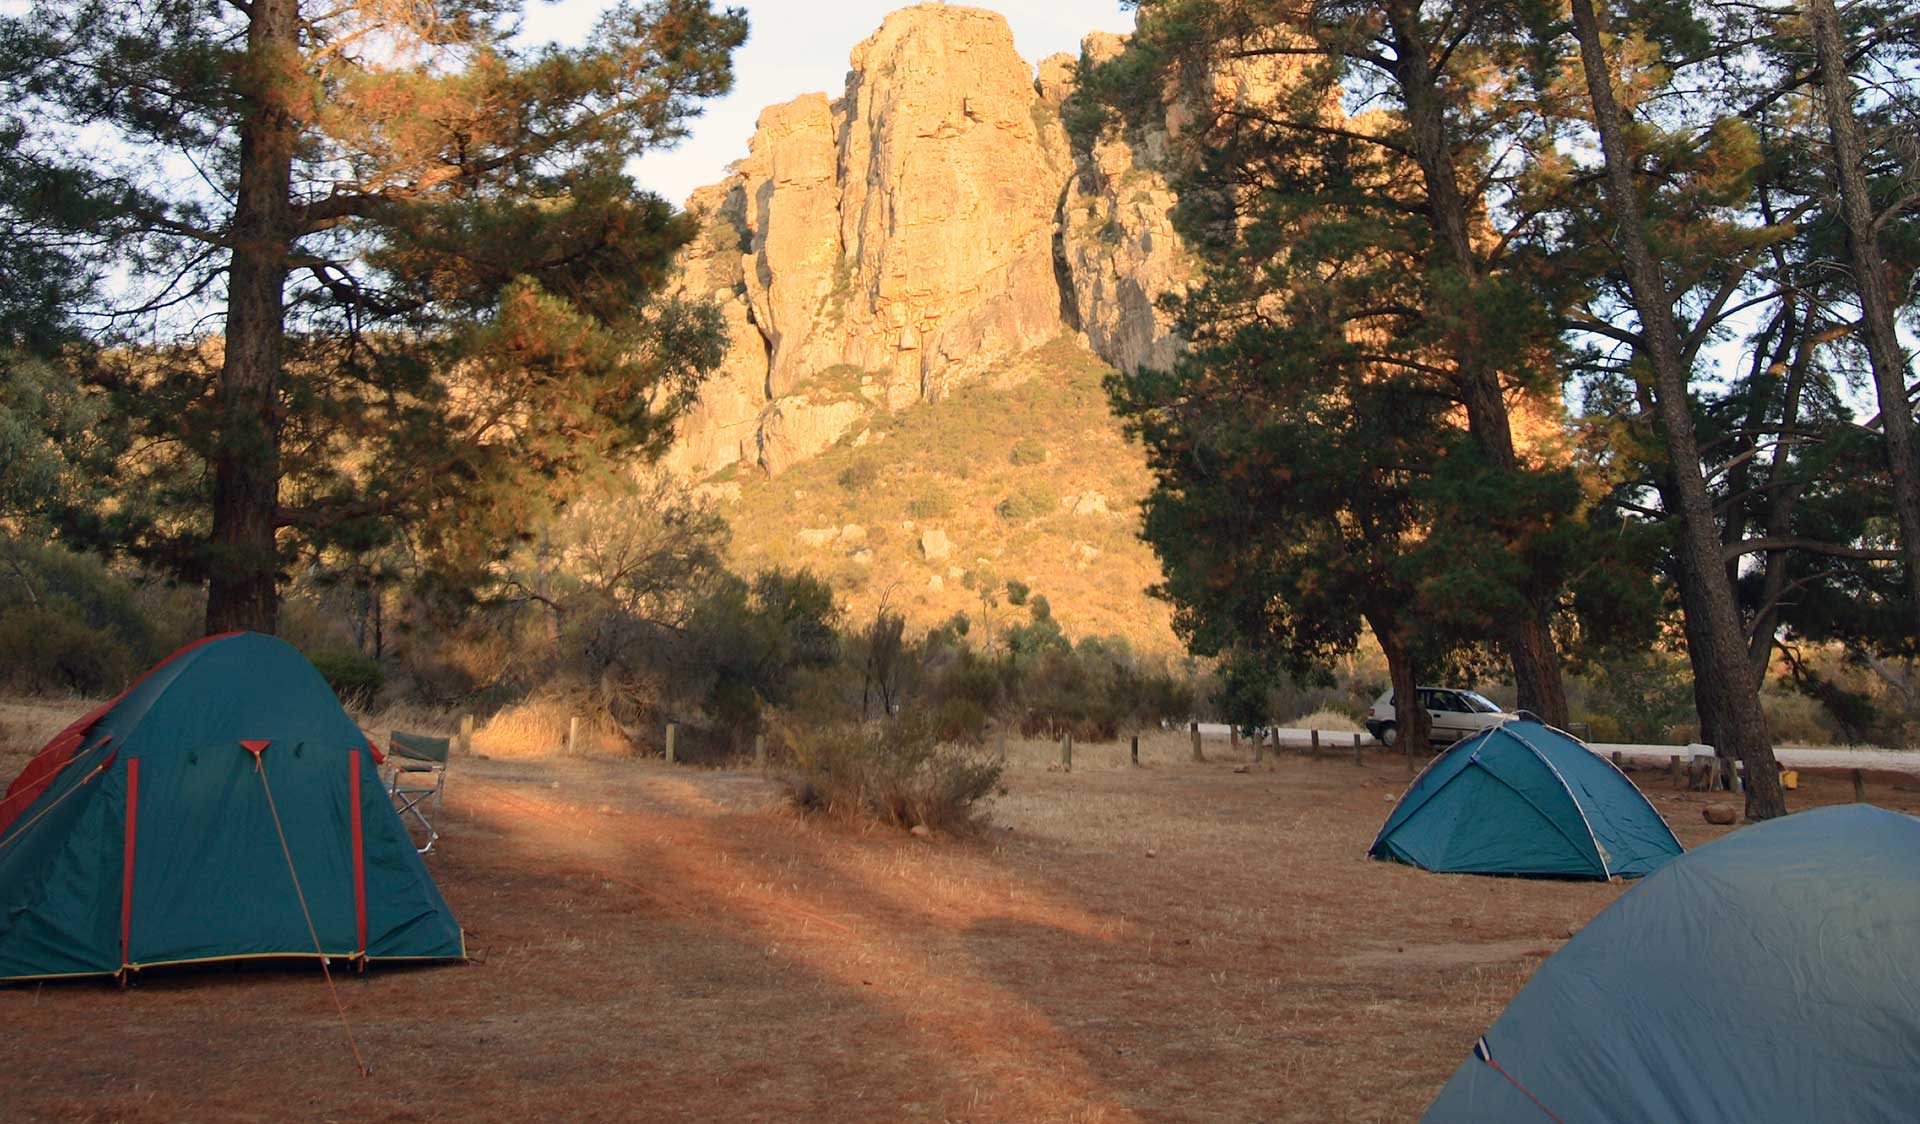 The campsite at Mount Arapiles